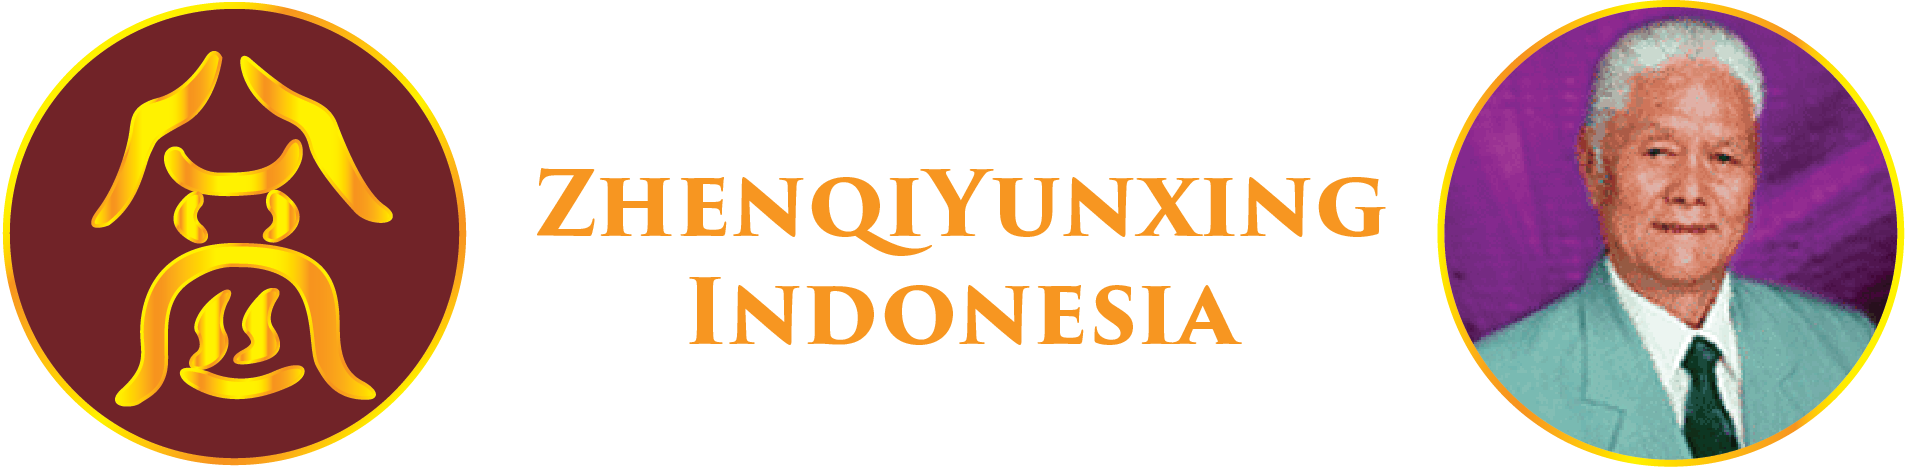 ZhenqiYunxing-Indonesia